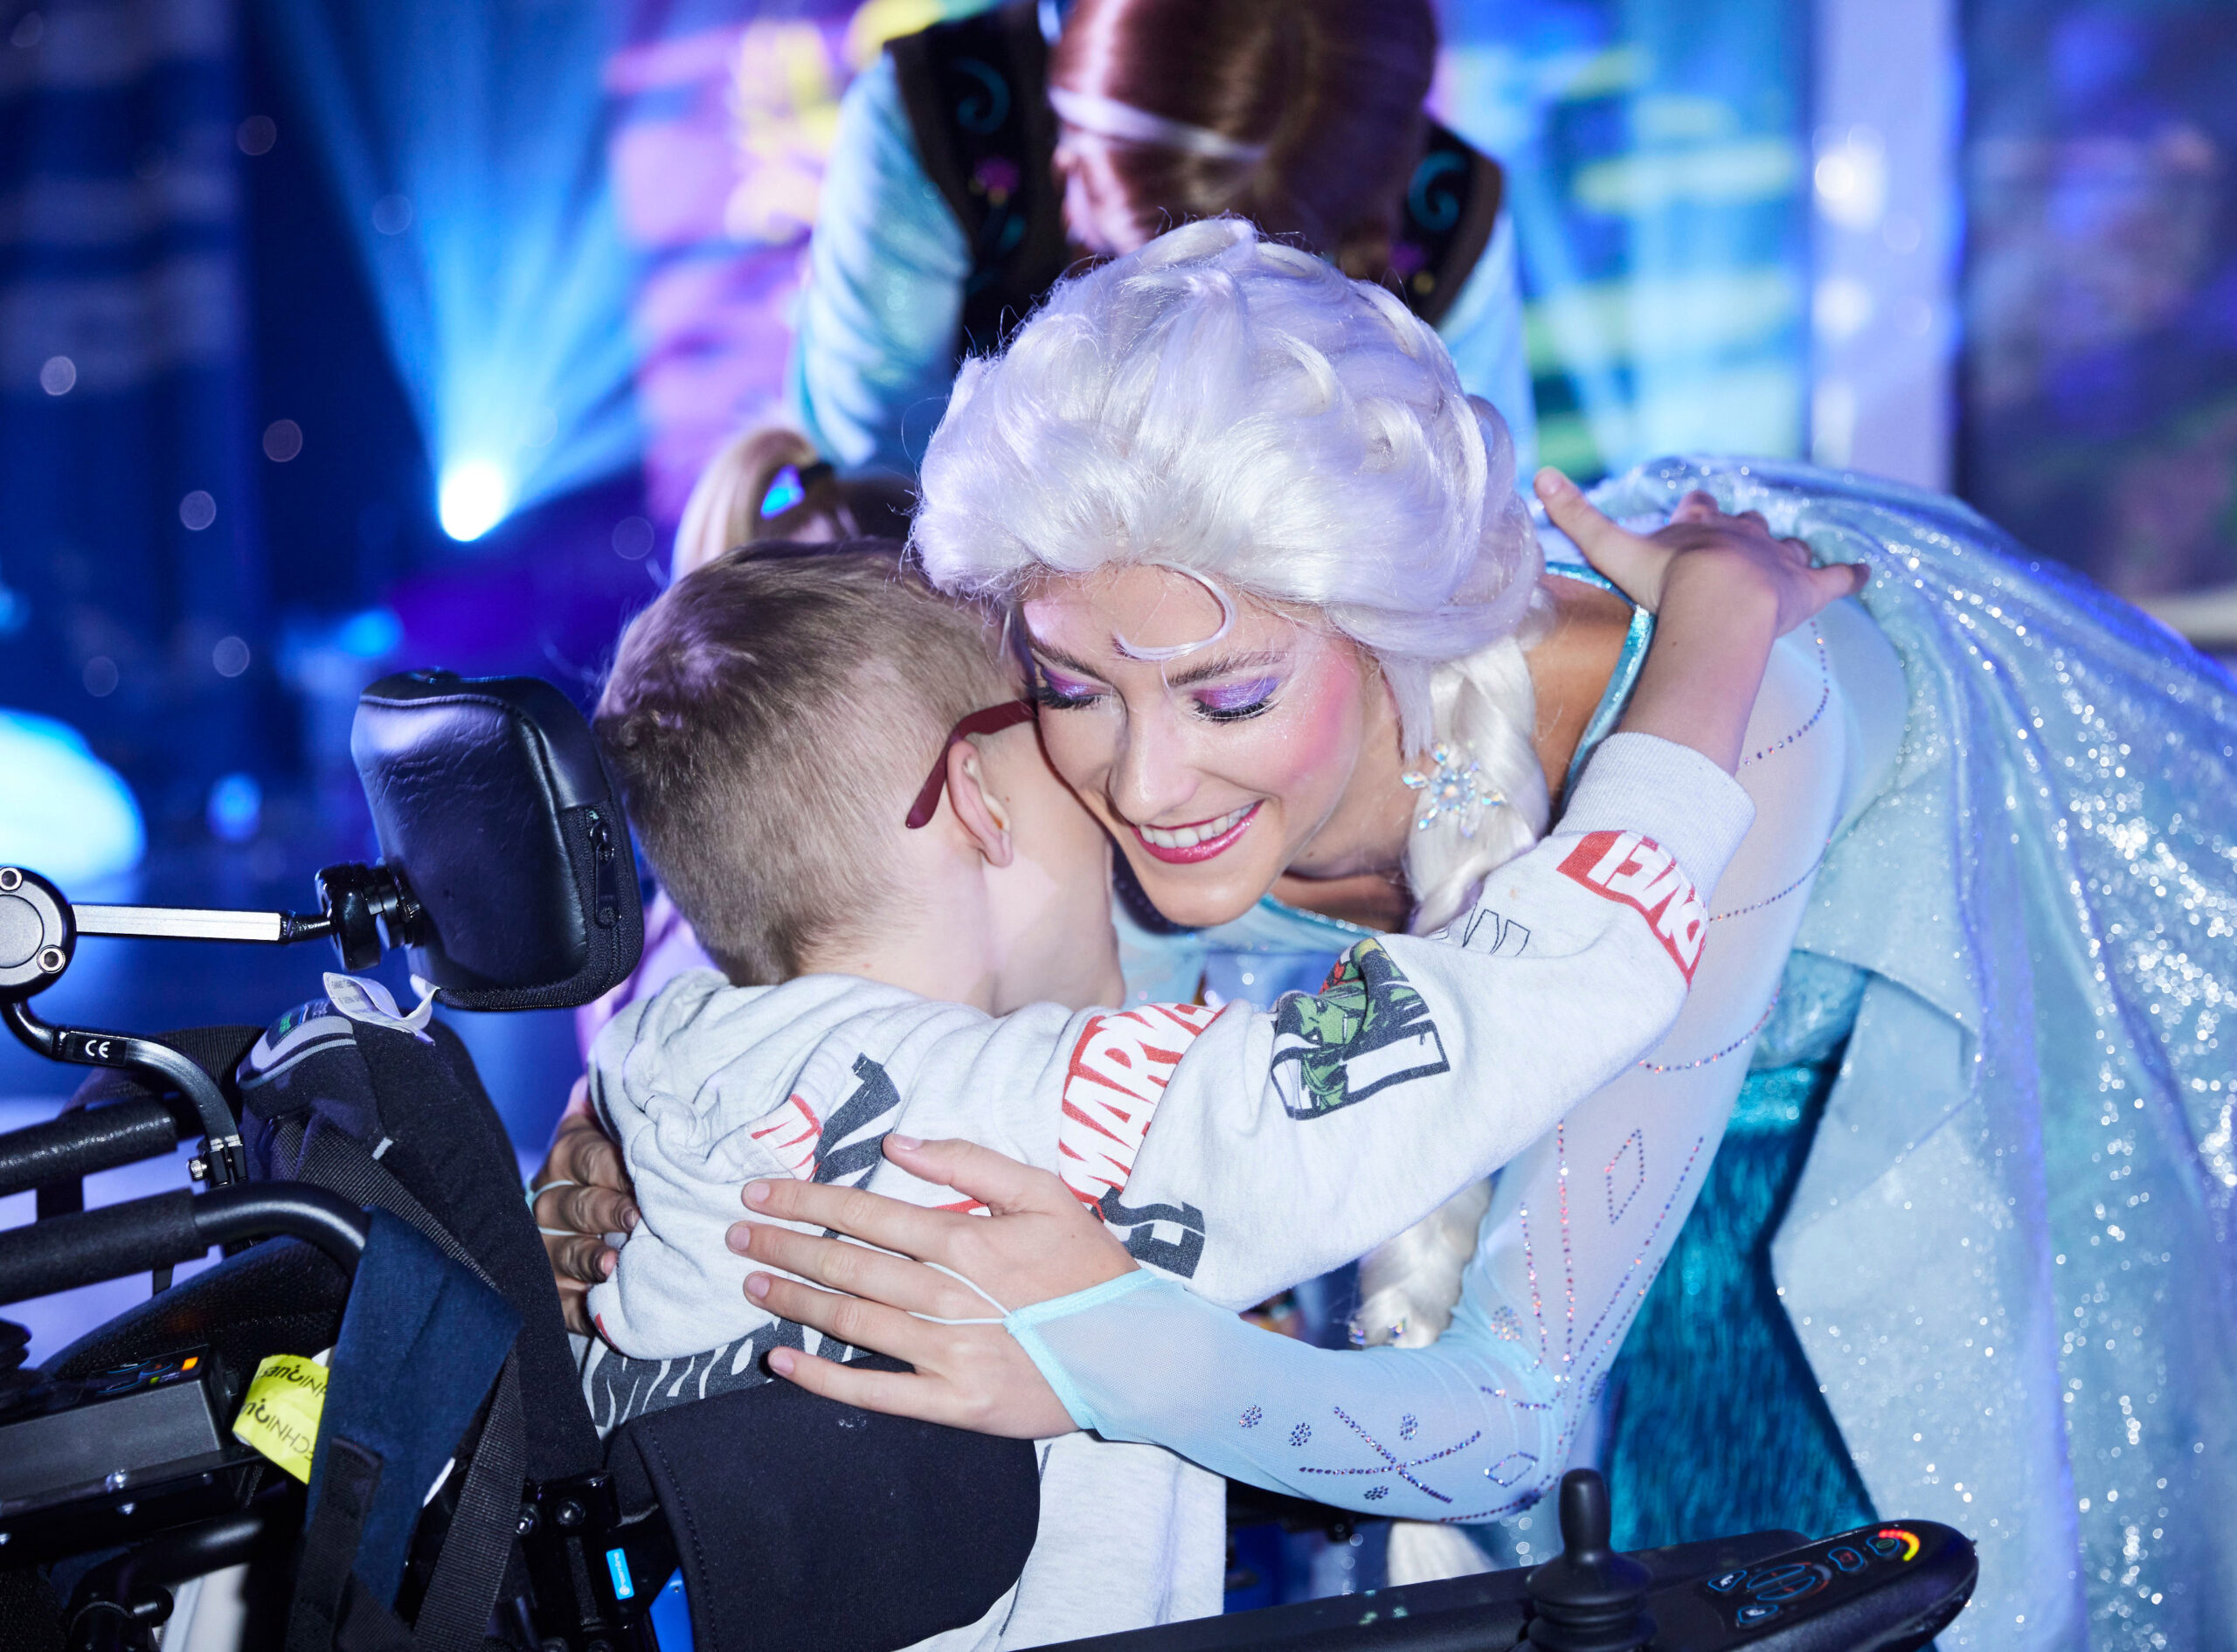 Elsa hugs a wish child